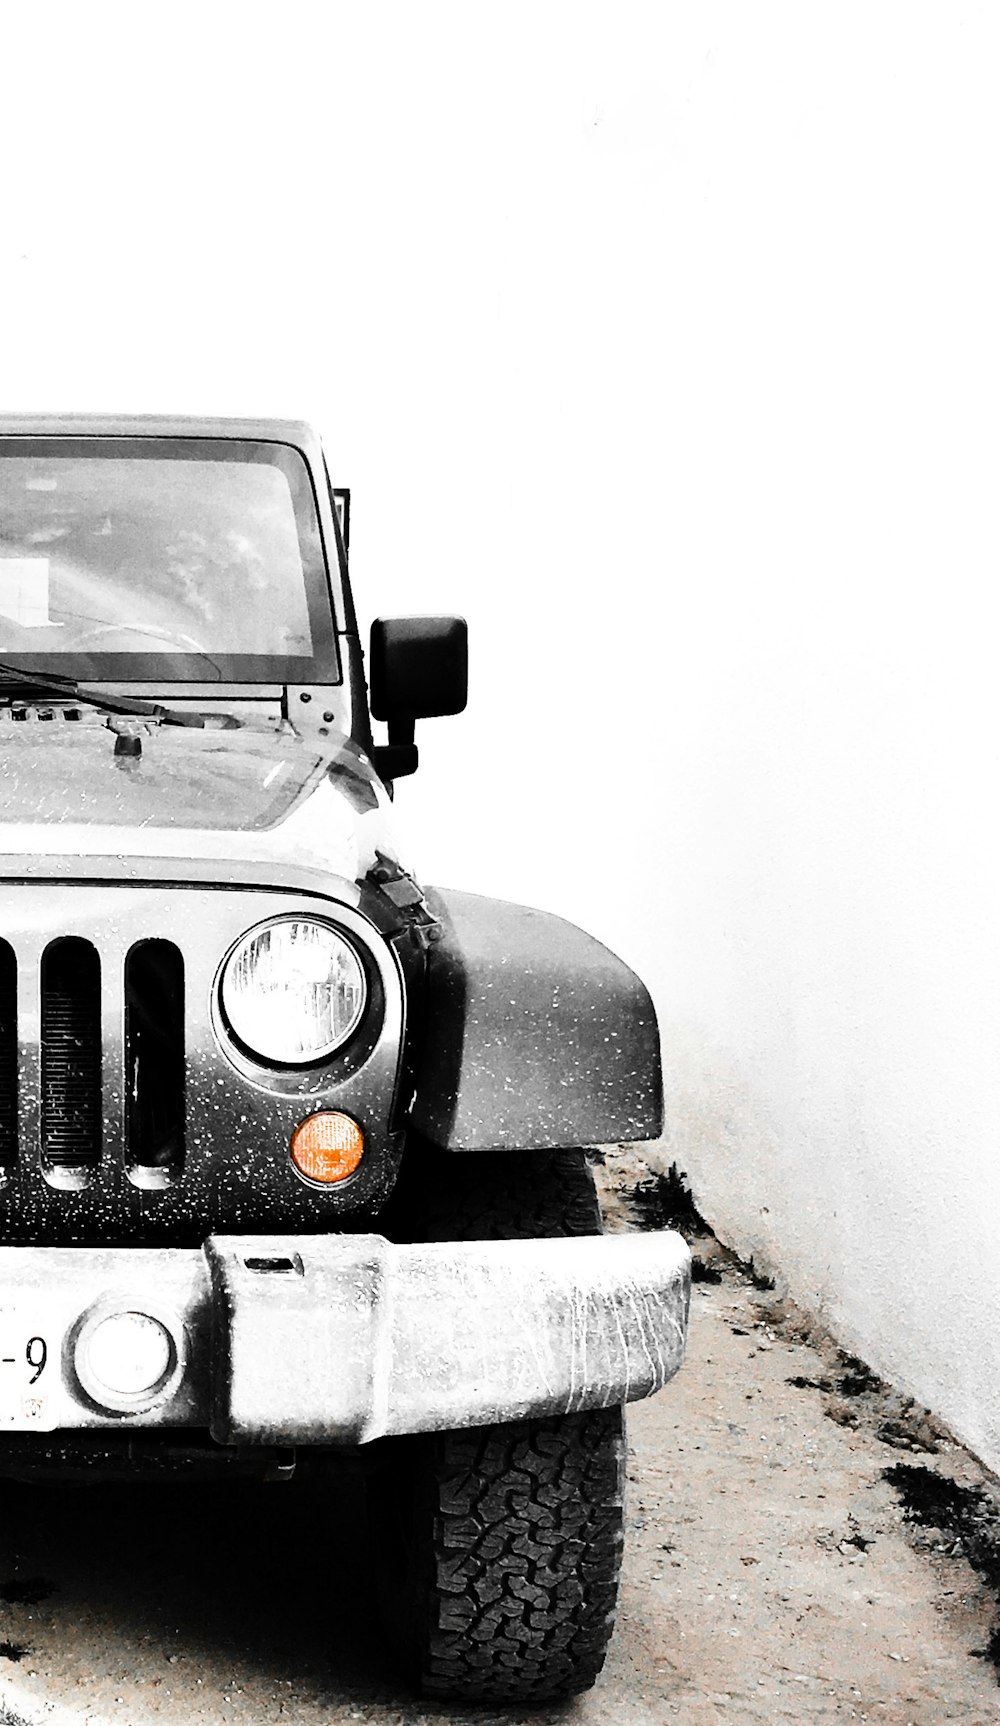 grey Jeep Wrangler on snow-covered ground during daytime photo – Free 4x4  Image on Unsplash